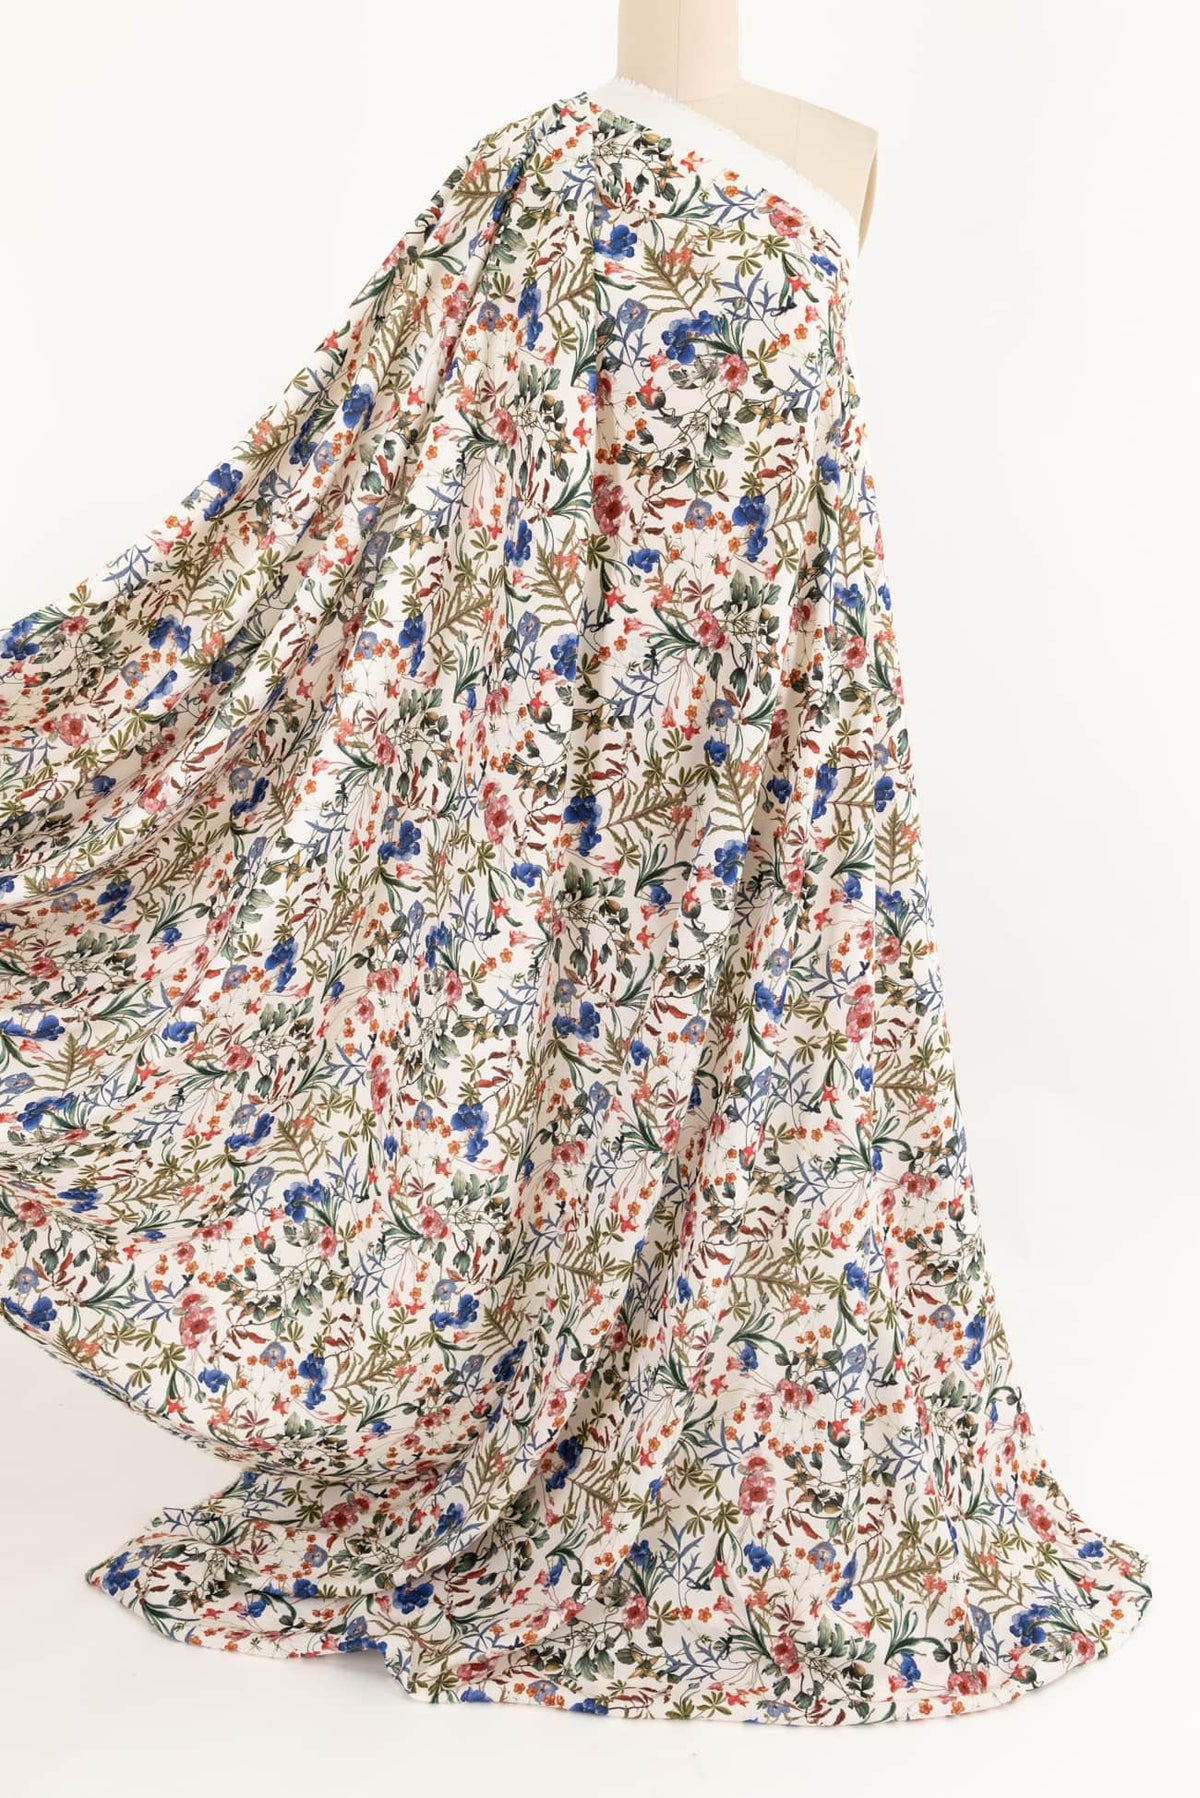 Wildflower Meados Viscose Woven - Marcy Tilton Fabrics